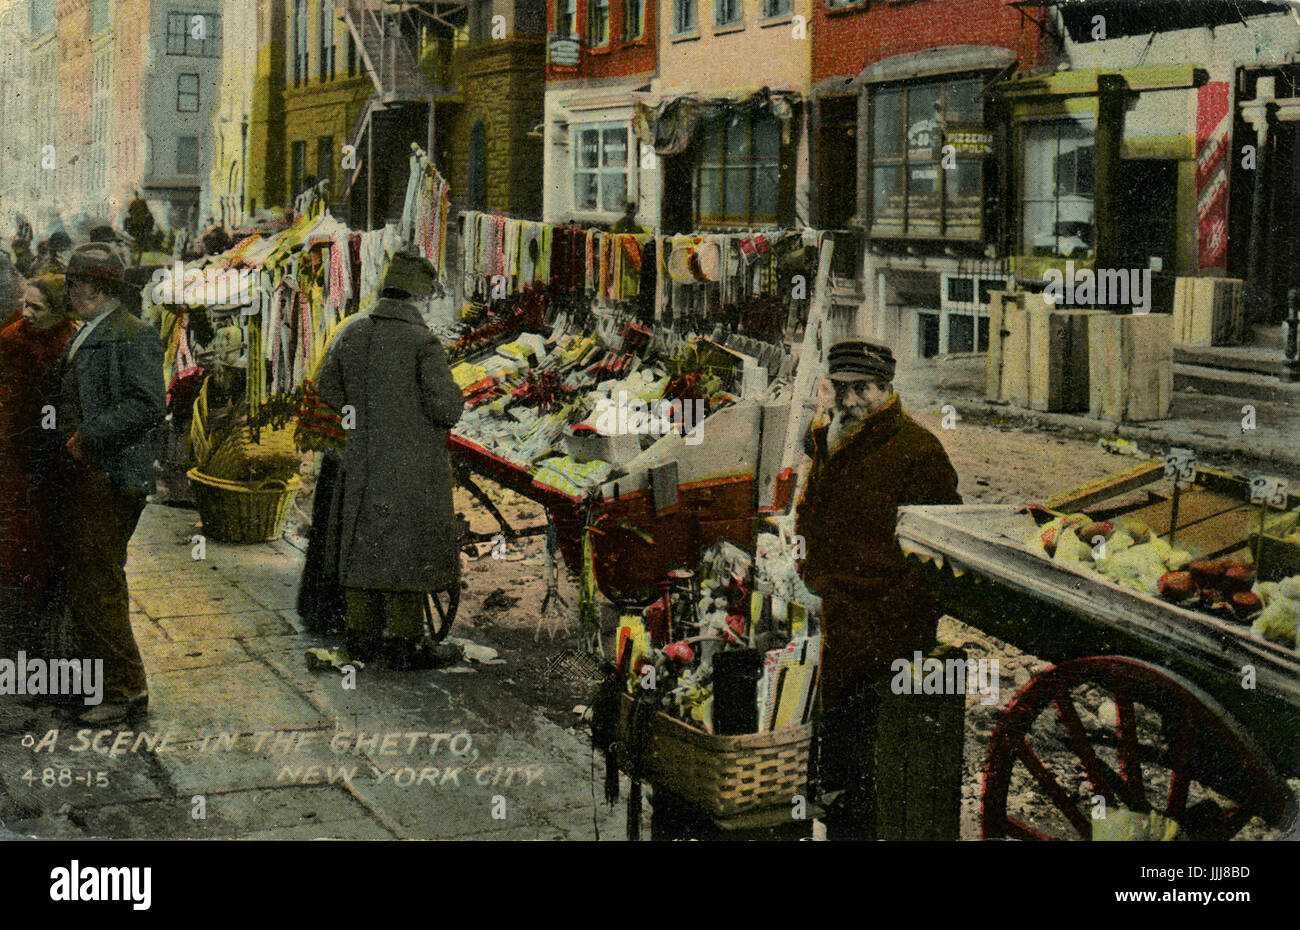 Market vendors, Jewish quarter, New York, c. 1918 - 1920 Stock Photo